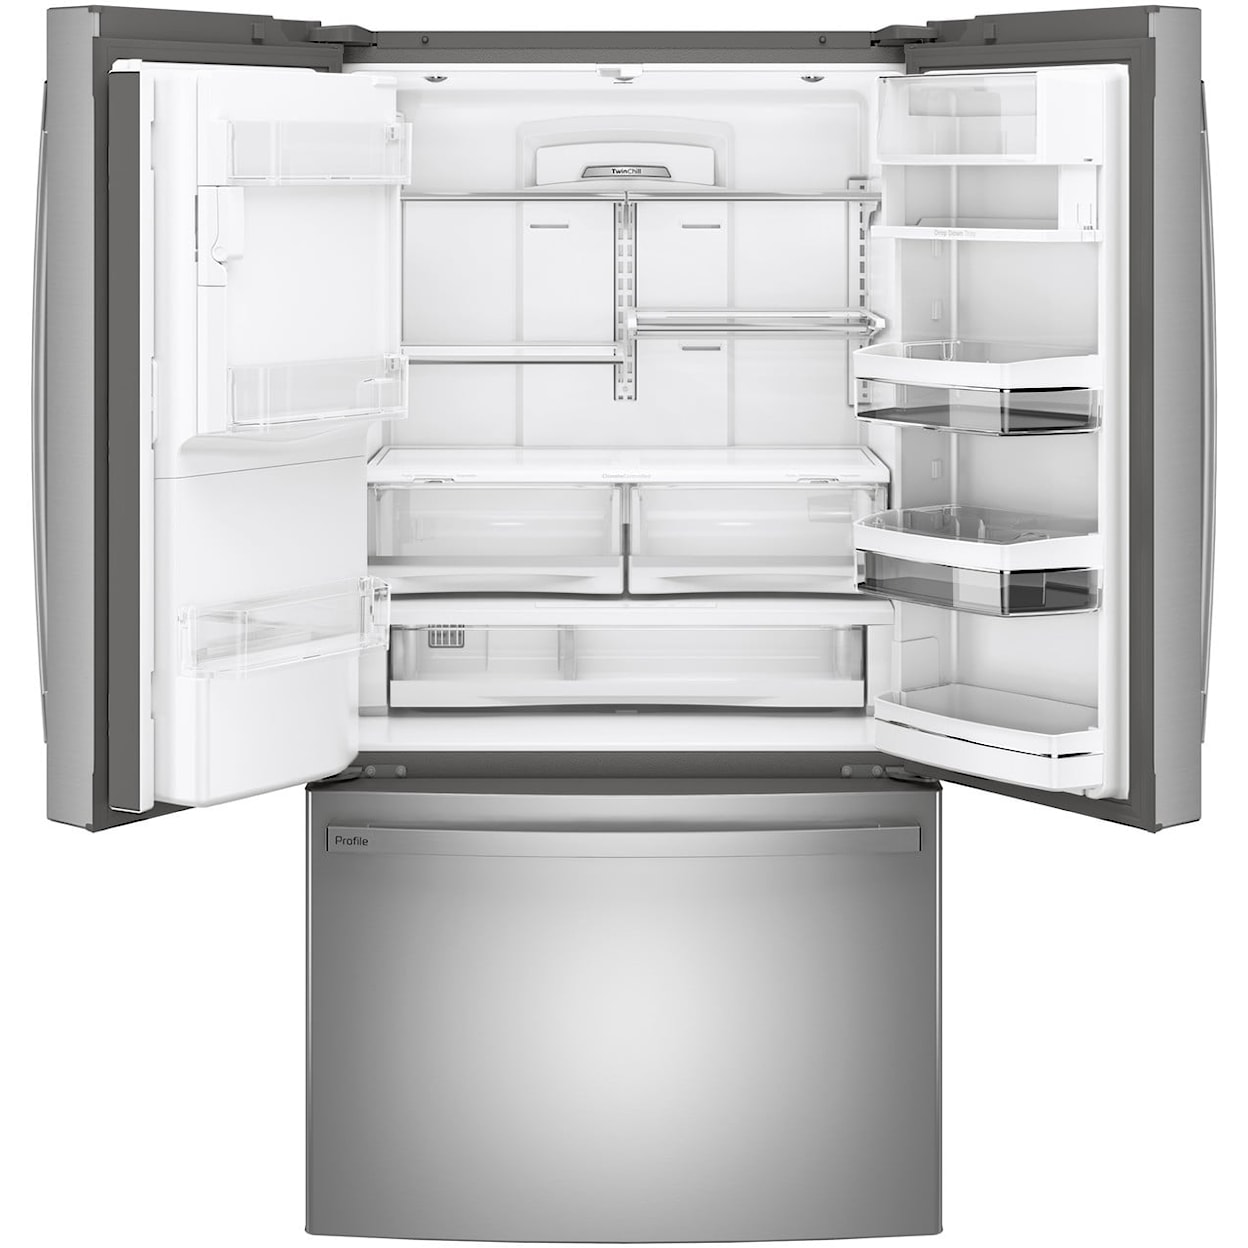 GE Appliances Refrigerators 22.1 cu. ft. French Door Refrigerator